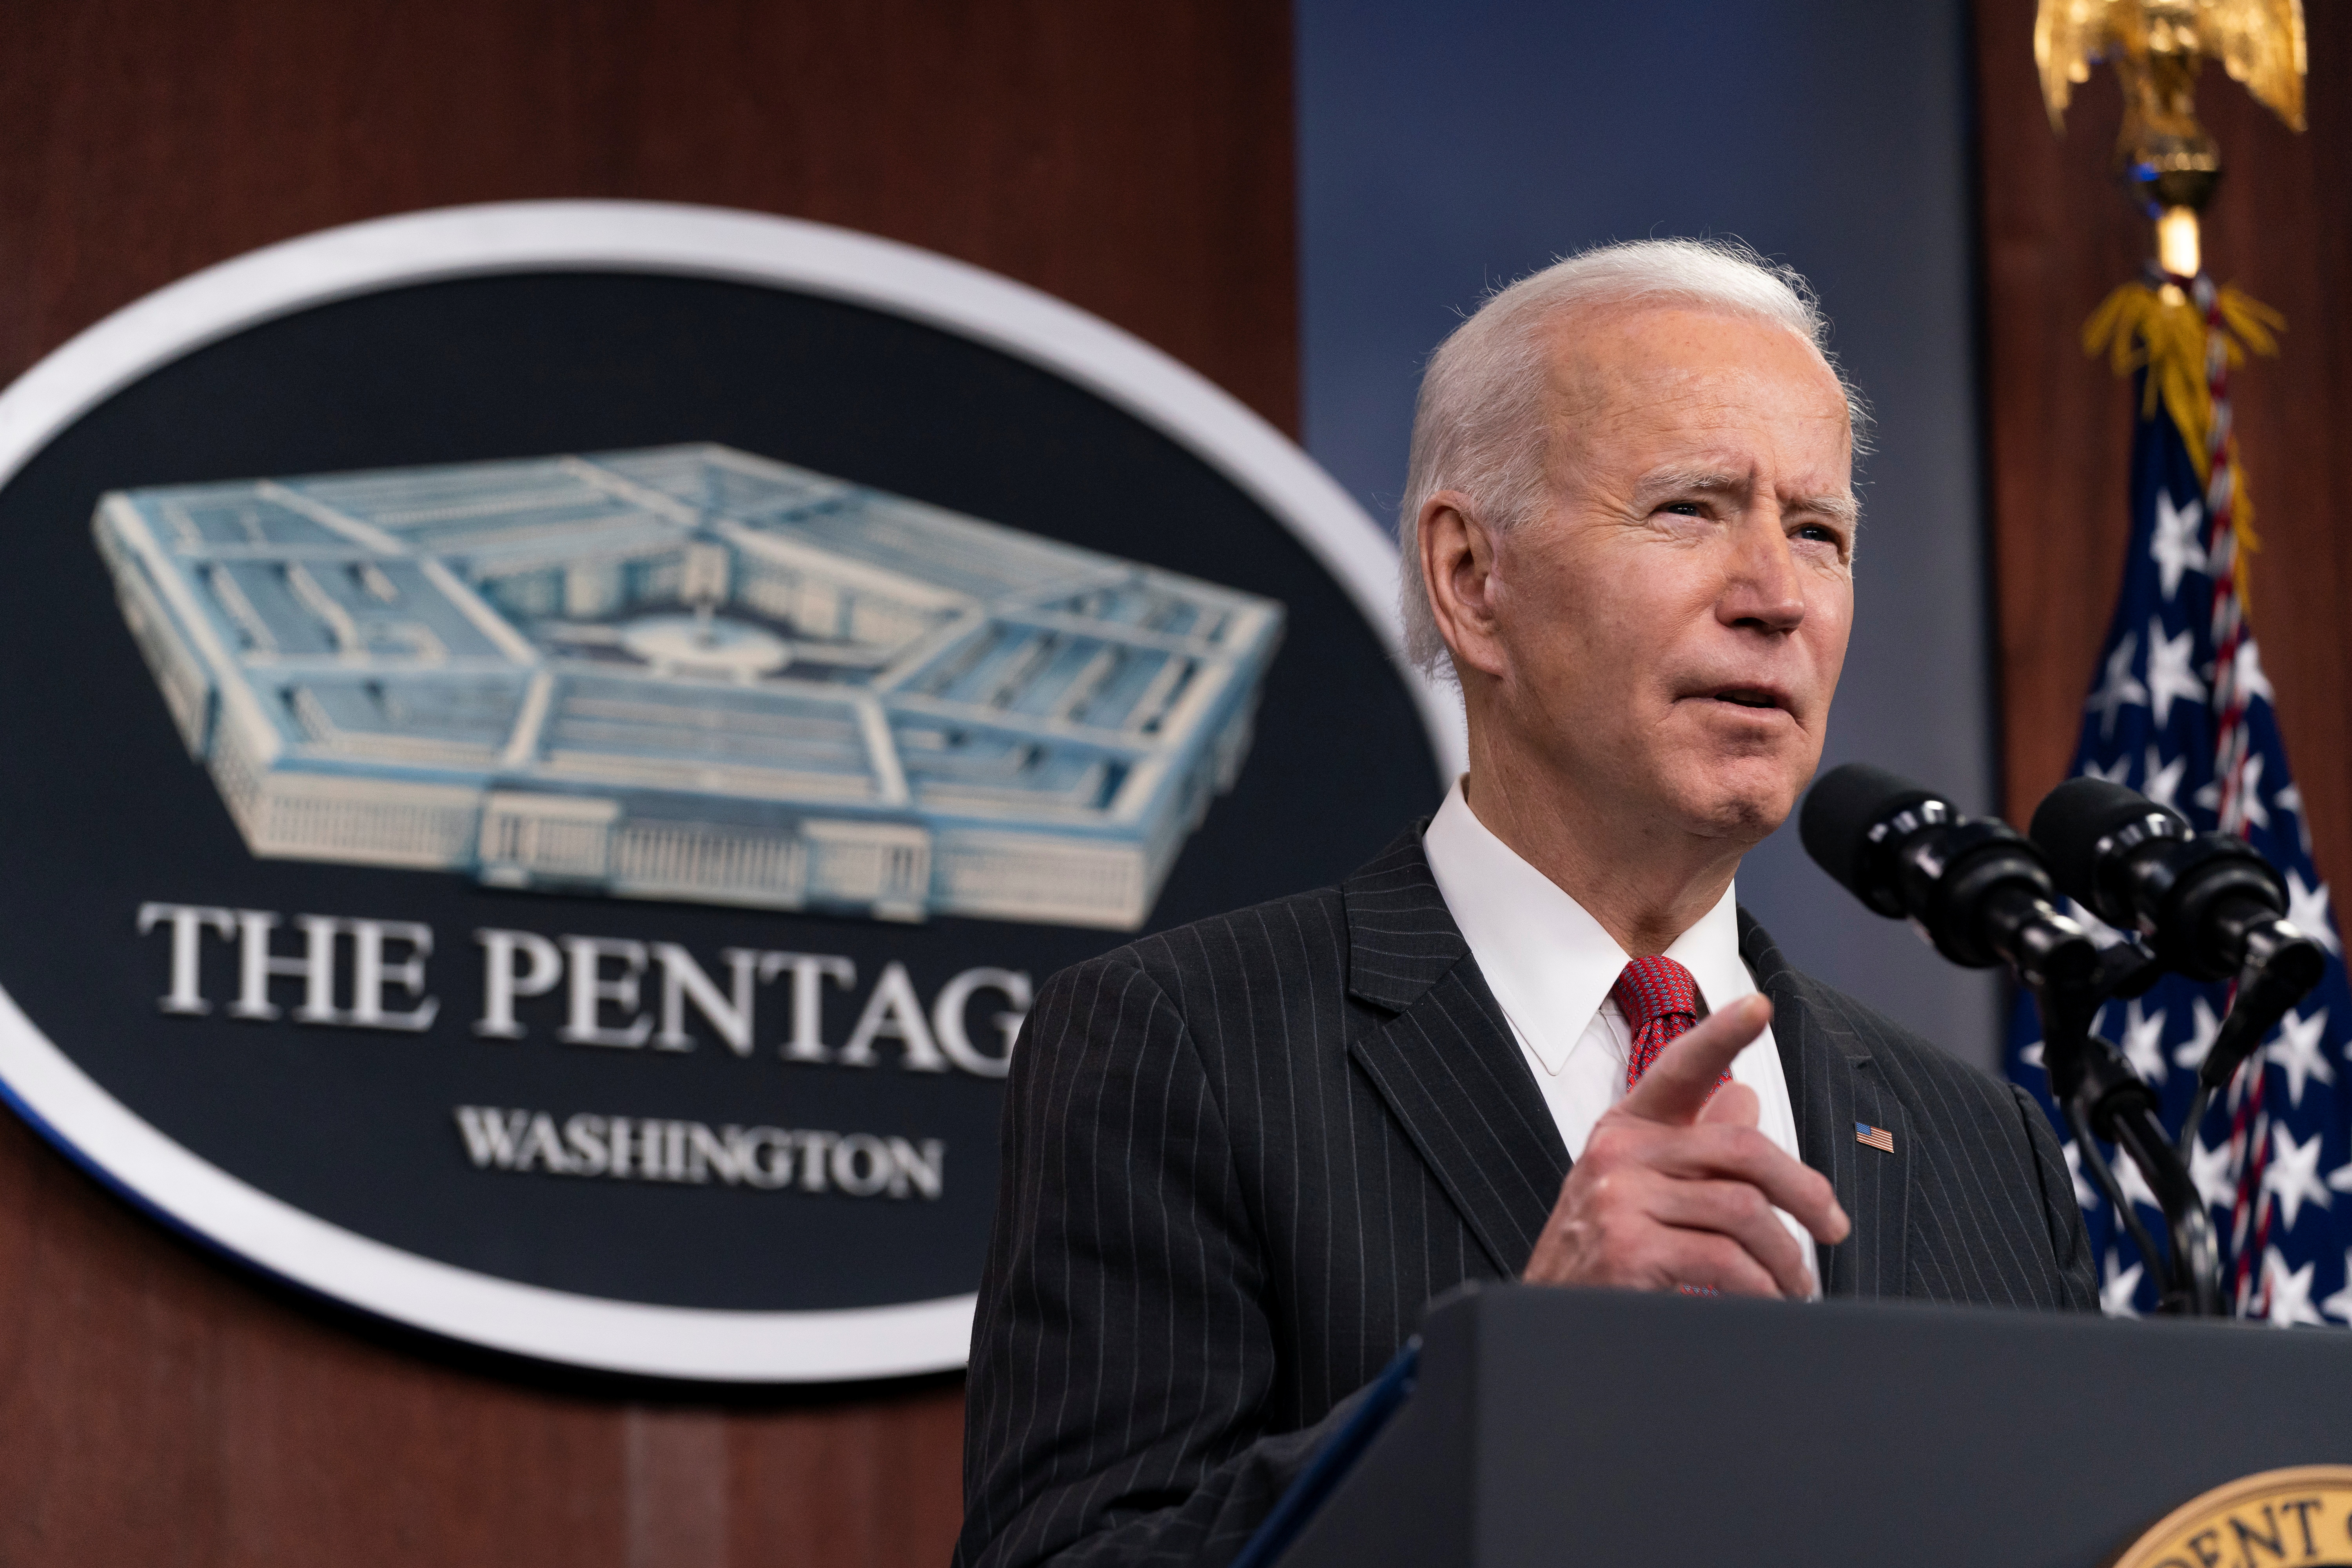 U.S. President Joe Biden speaks at the Pentagon in Arlington, Virginia, U.S., February 10, 2021. Alex Brandon/Pool via REUTERS